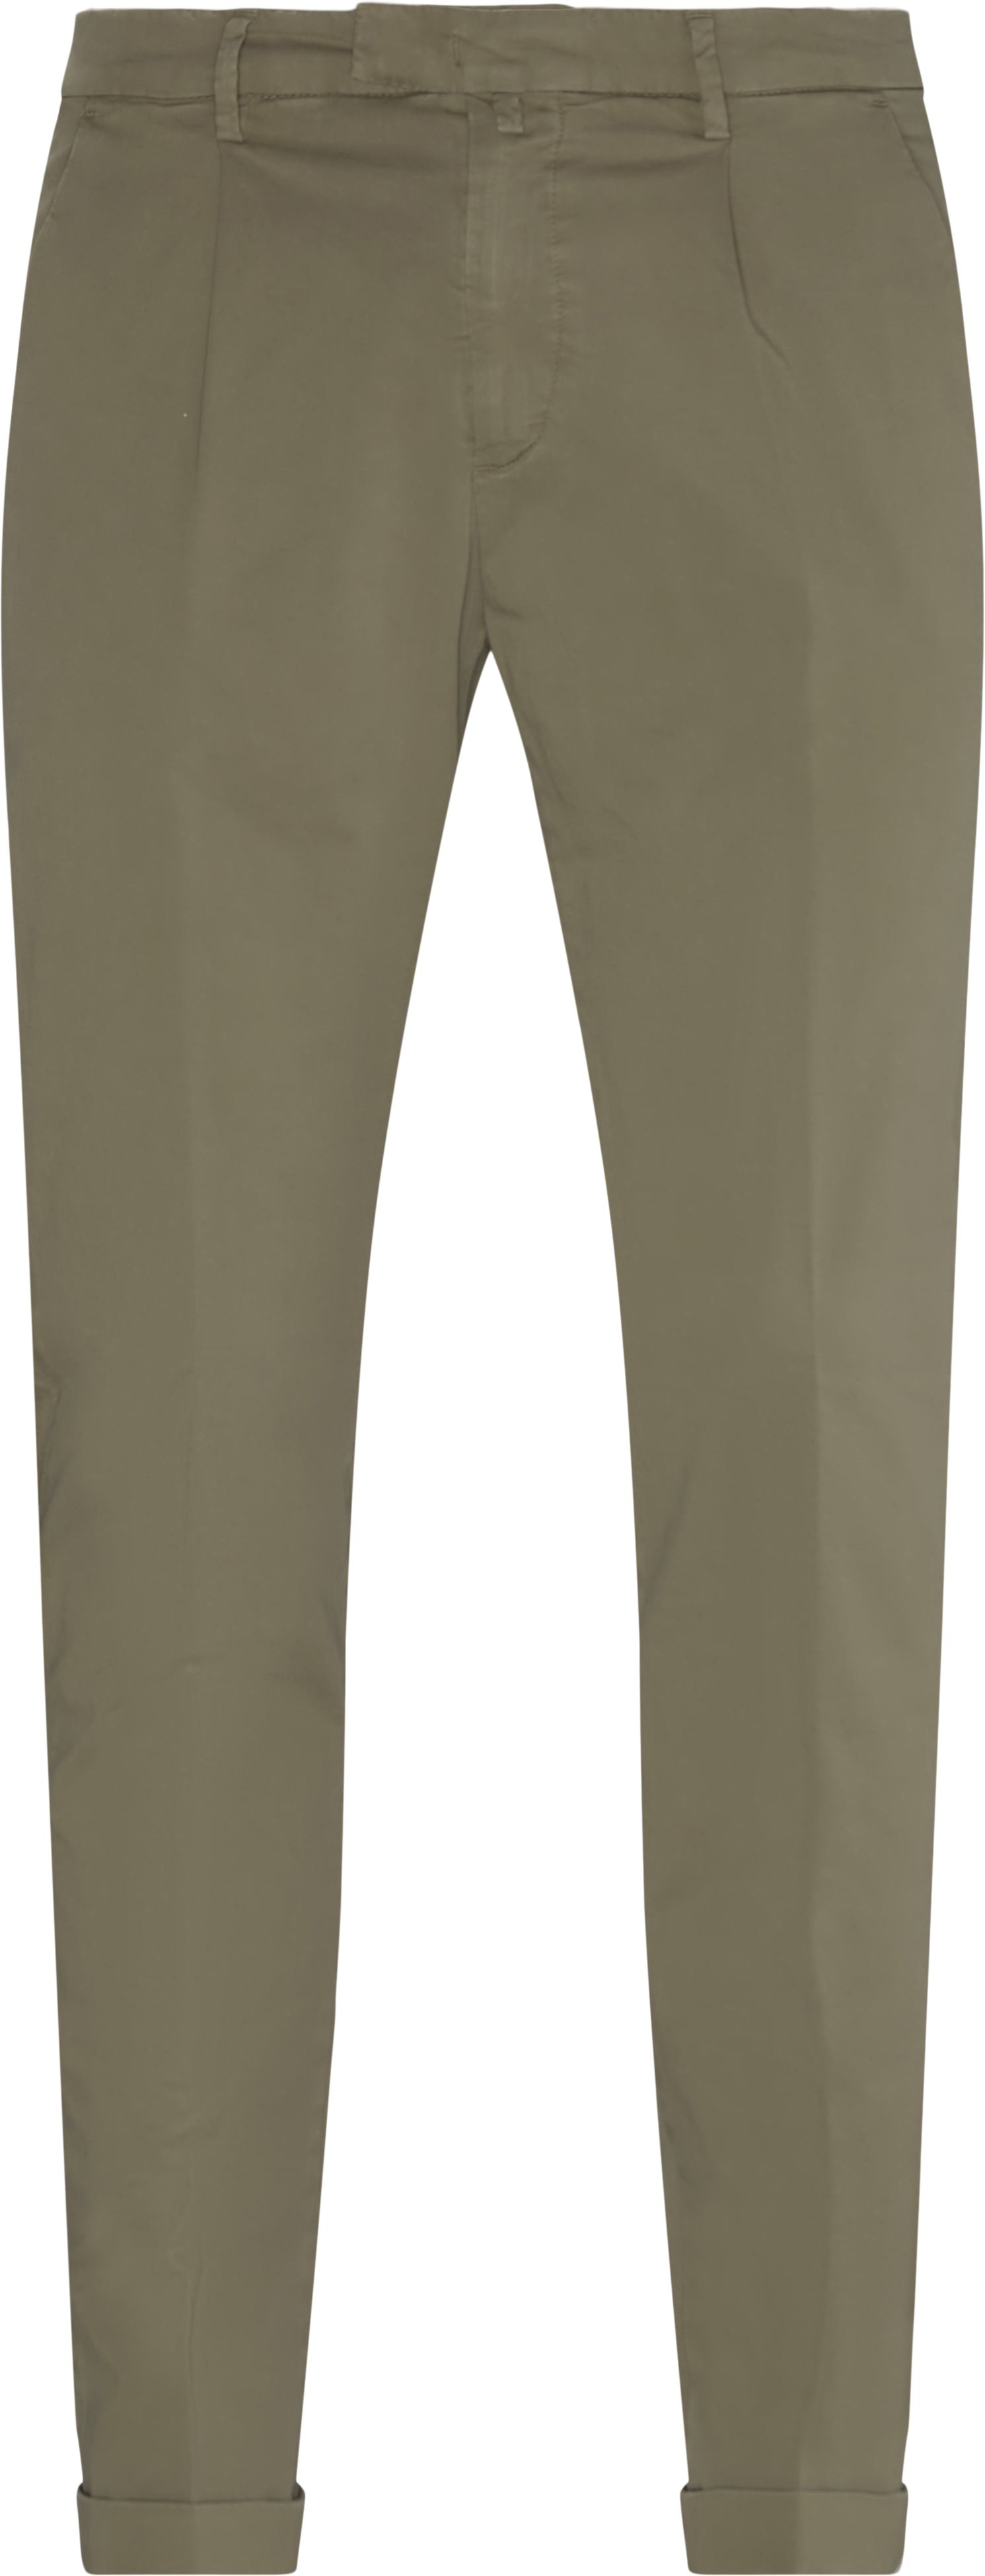 BRIGLIA Trousers 32057  Army